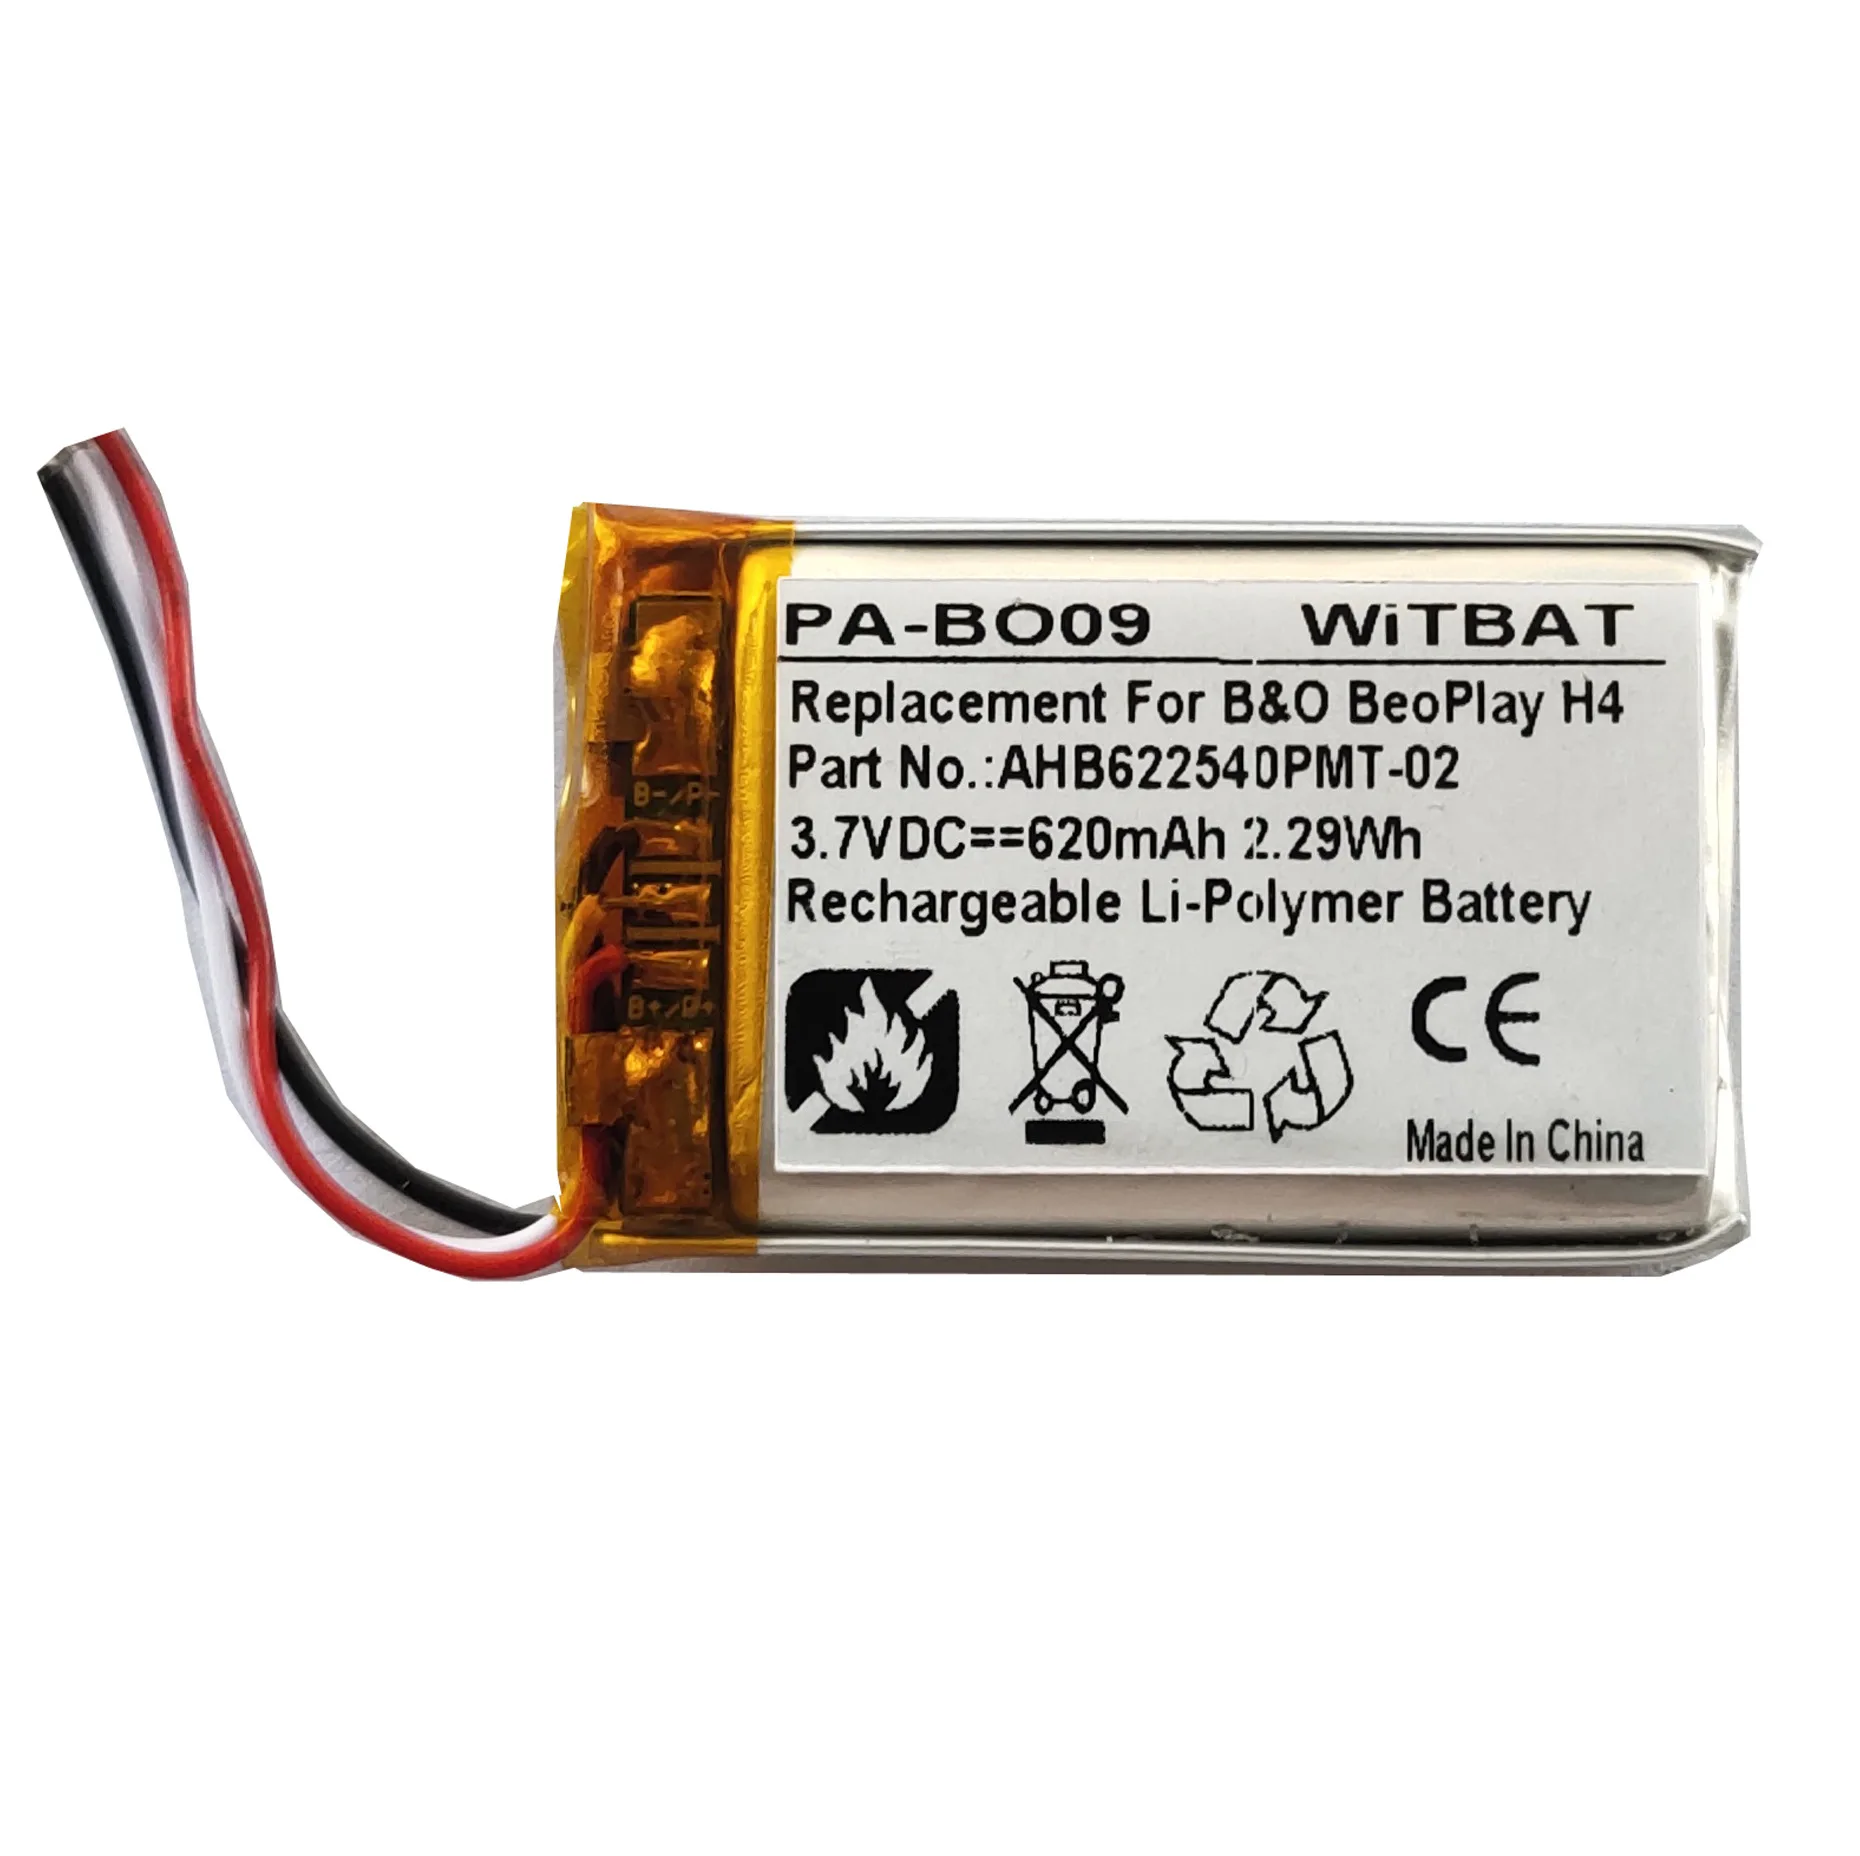 Batería TTVXO 620mAh para Bang & Olufsen BeoPlay H4 auriculares Bluetooth batería AHB622540PMT-02